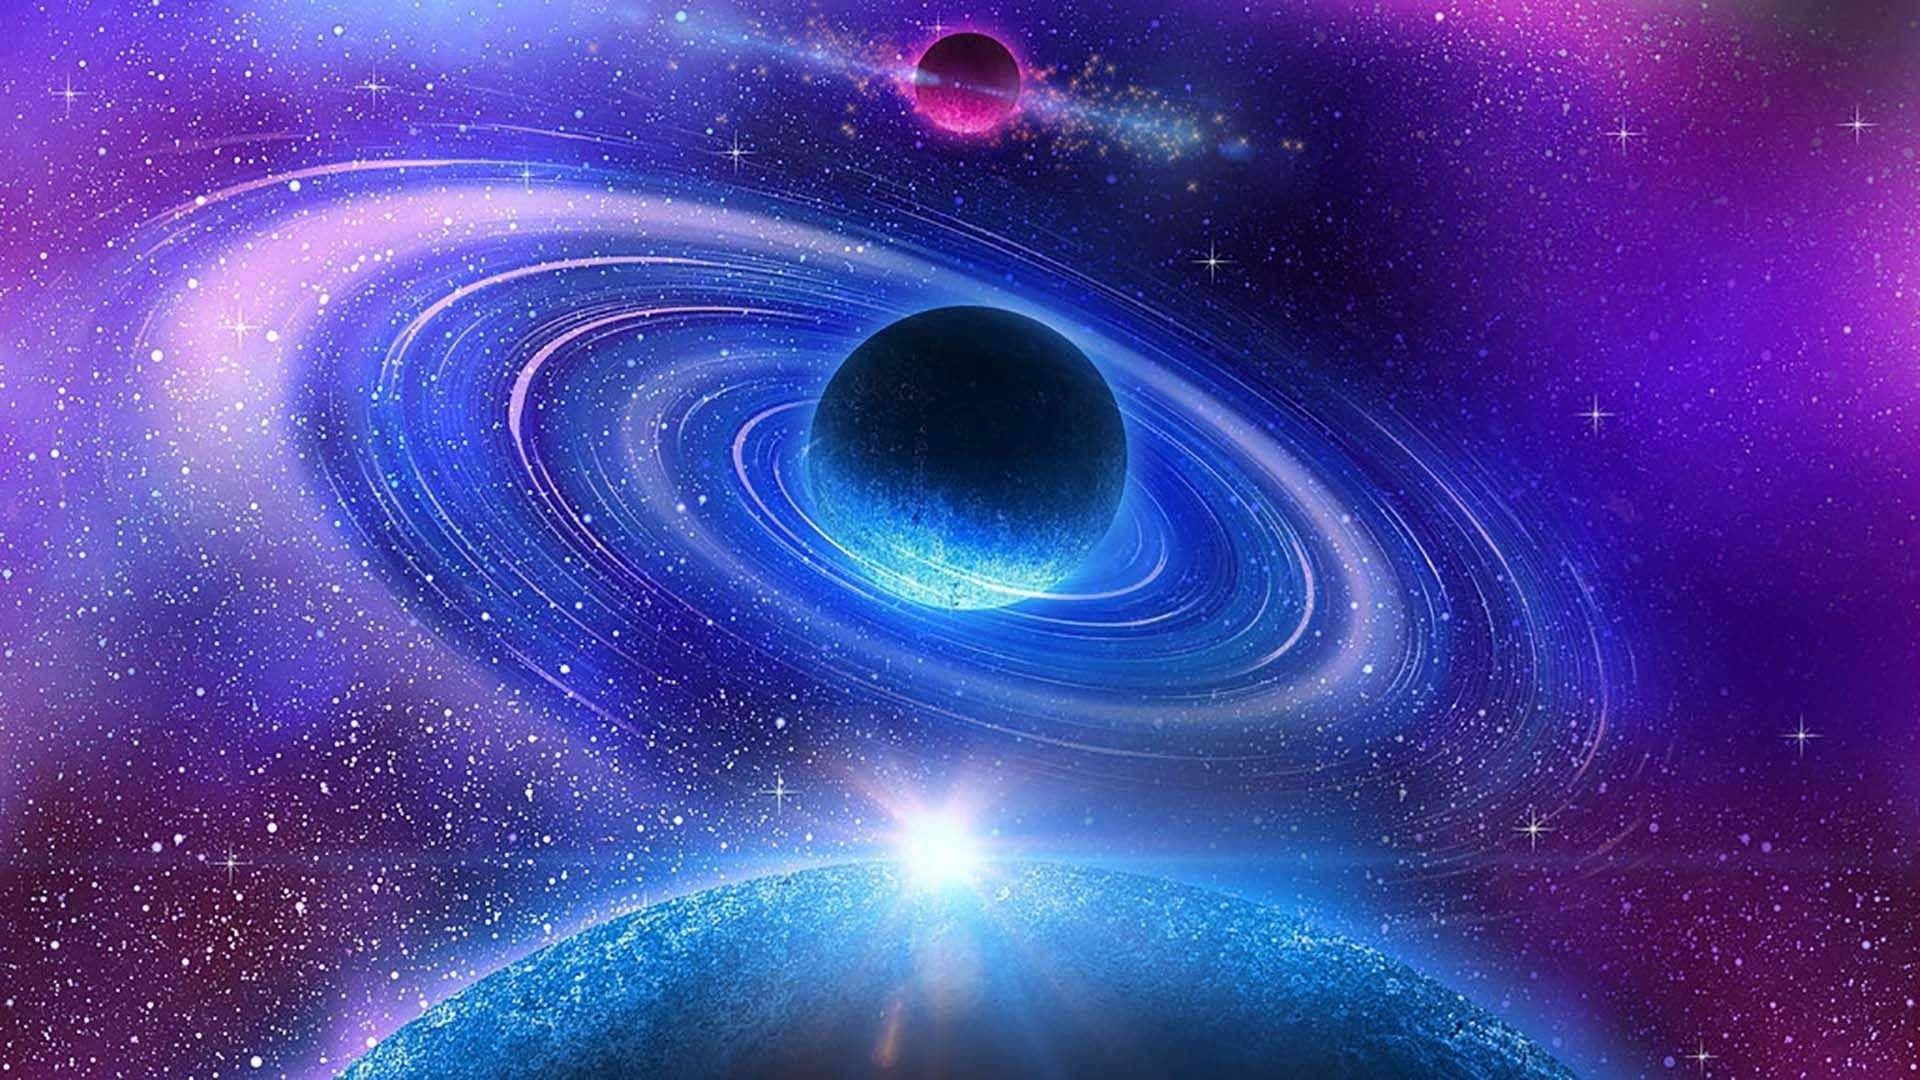 Cool Galaxy Ringet Planet Wallpaper